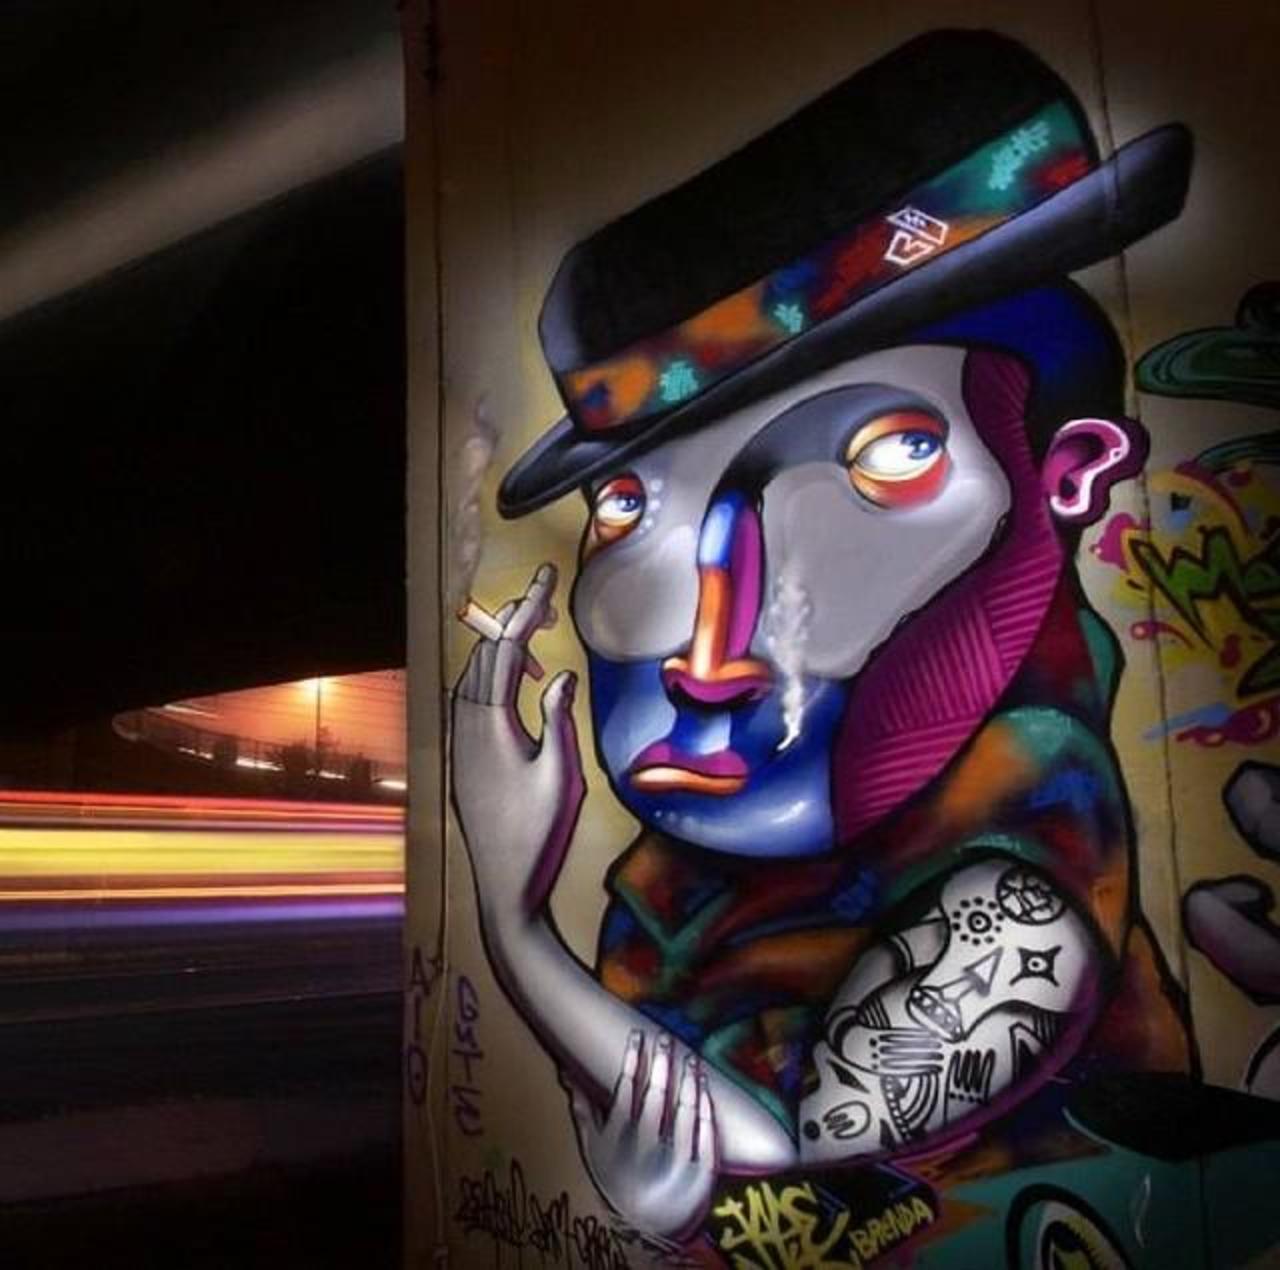 RT @GoogleStreetArt: Abstract Street Art by Jade Rivera 

#art #mural #graffiti #streetart http://t.co/GWIXMUAy1k